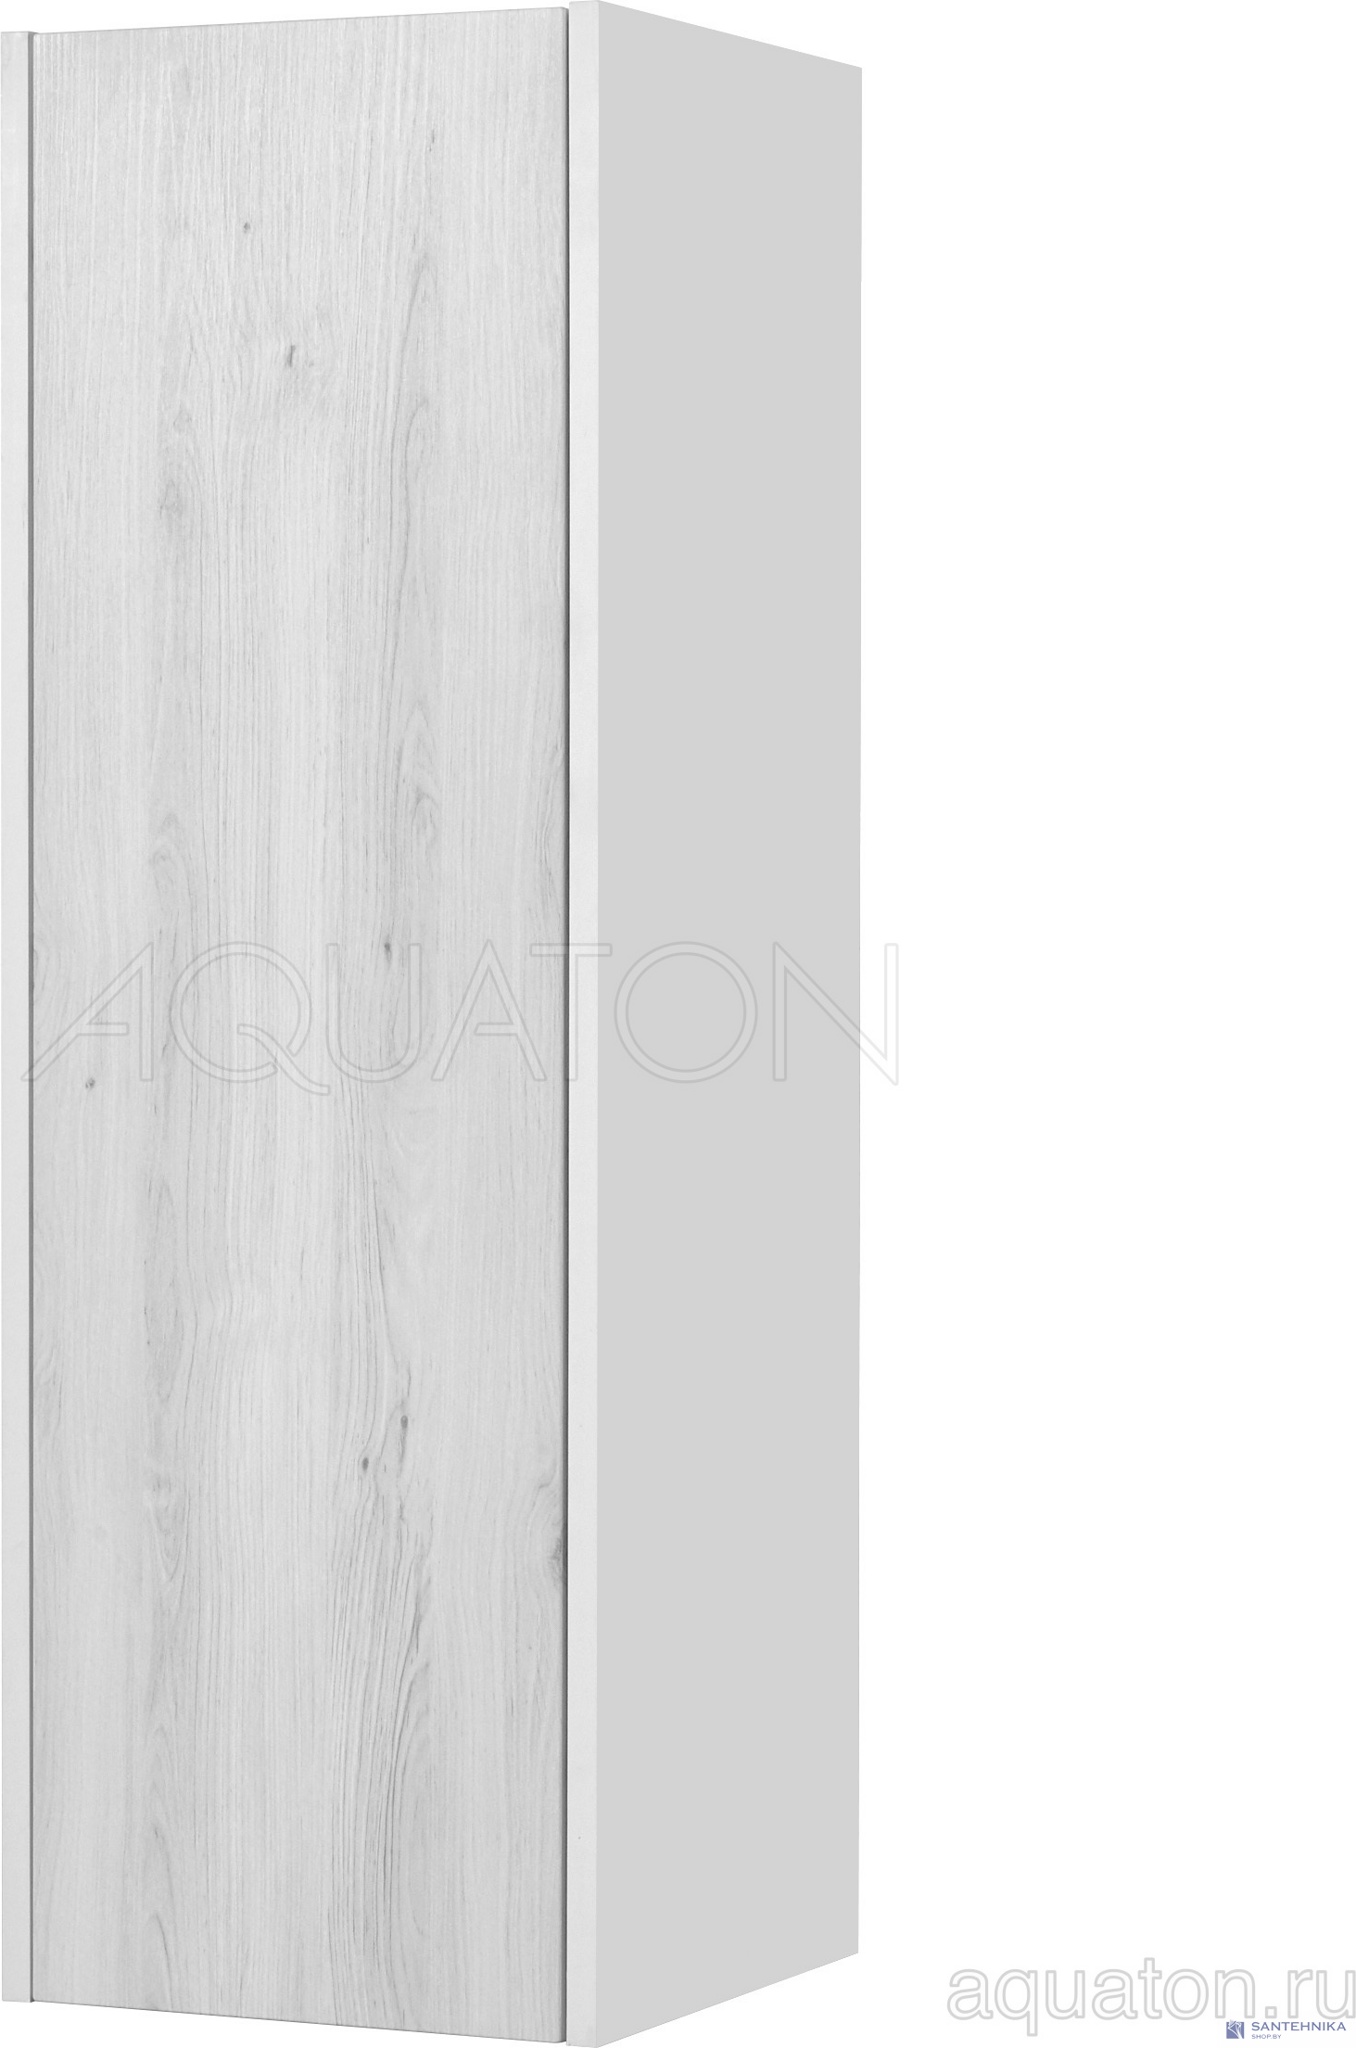 Шкафчик Aquaton Сакура ольха наварра, белый глянец 1A220803SKW8(L/R)